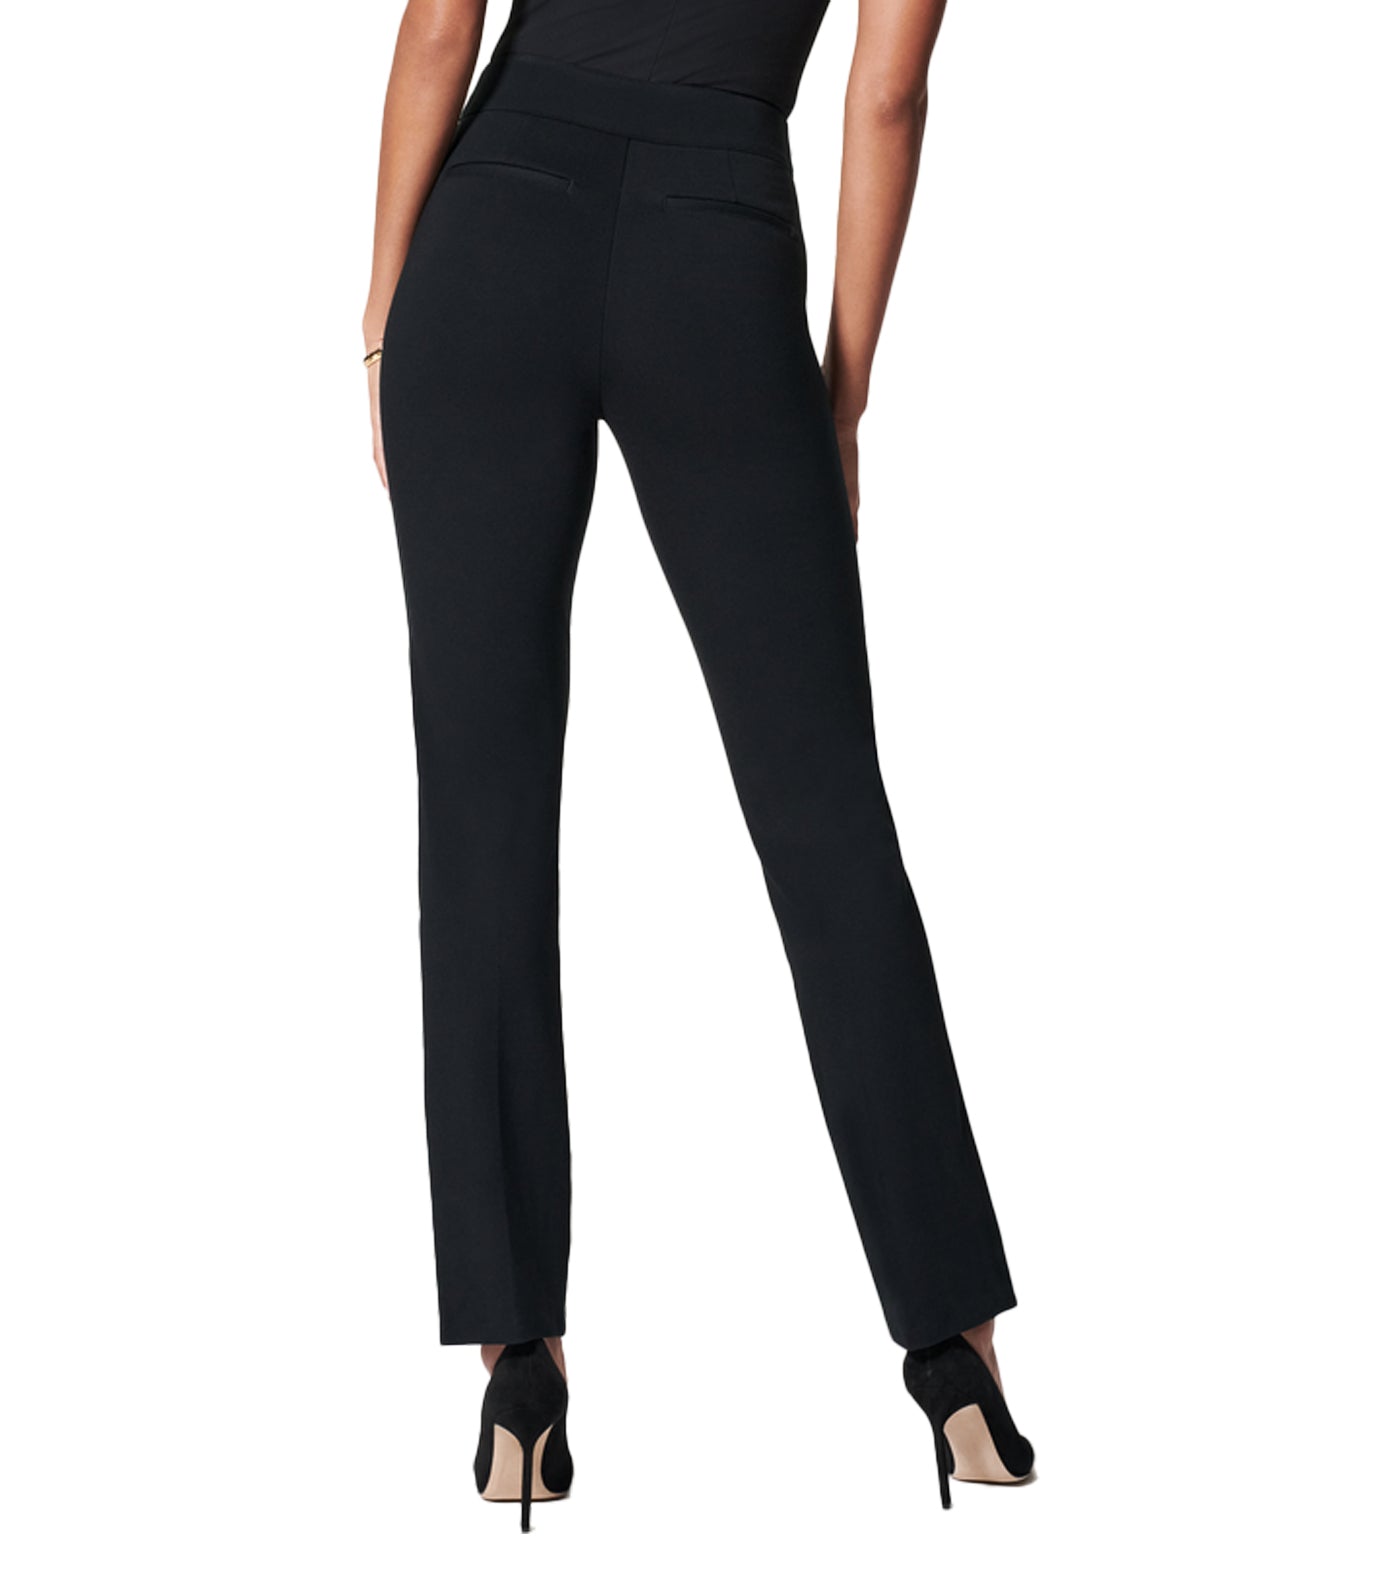 NEW Spanx High Waist Straight Leg Ponte Pants in Black – Size 3X